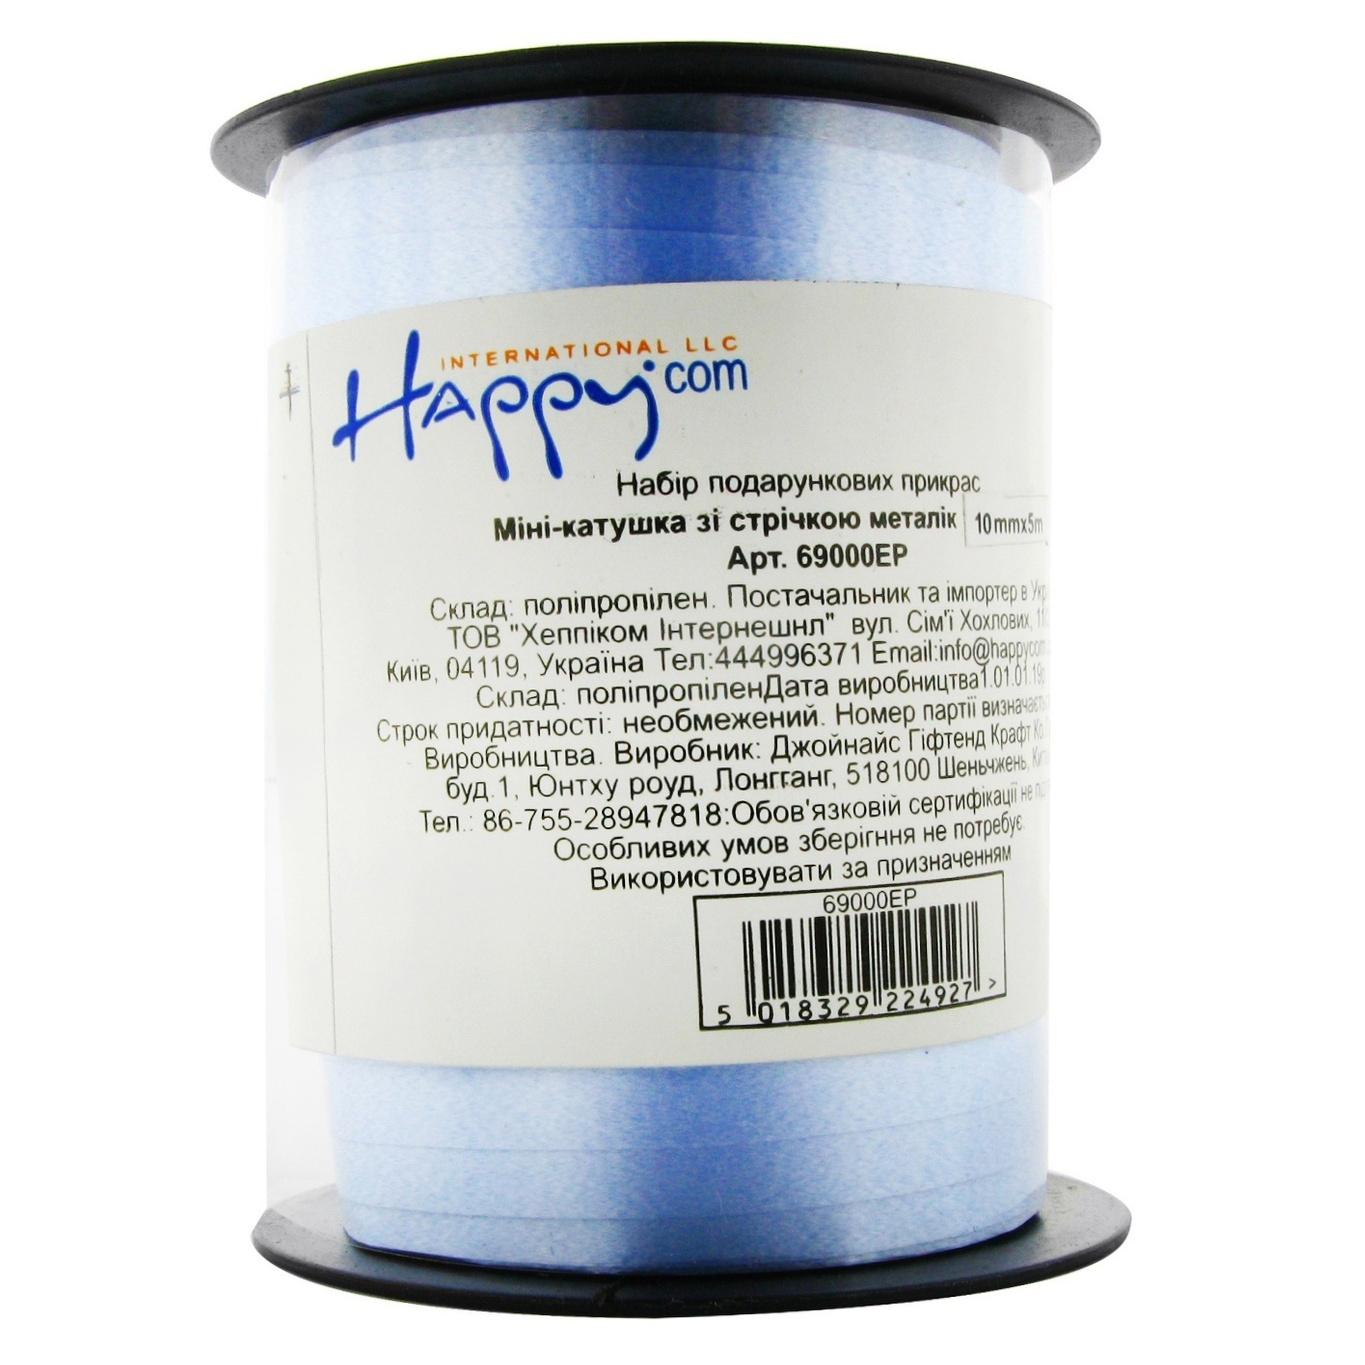 Gift wrapping tape Happycom polypropylene mini reel 15mm*3m